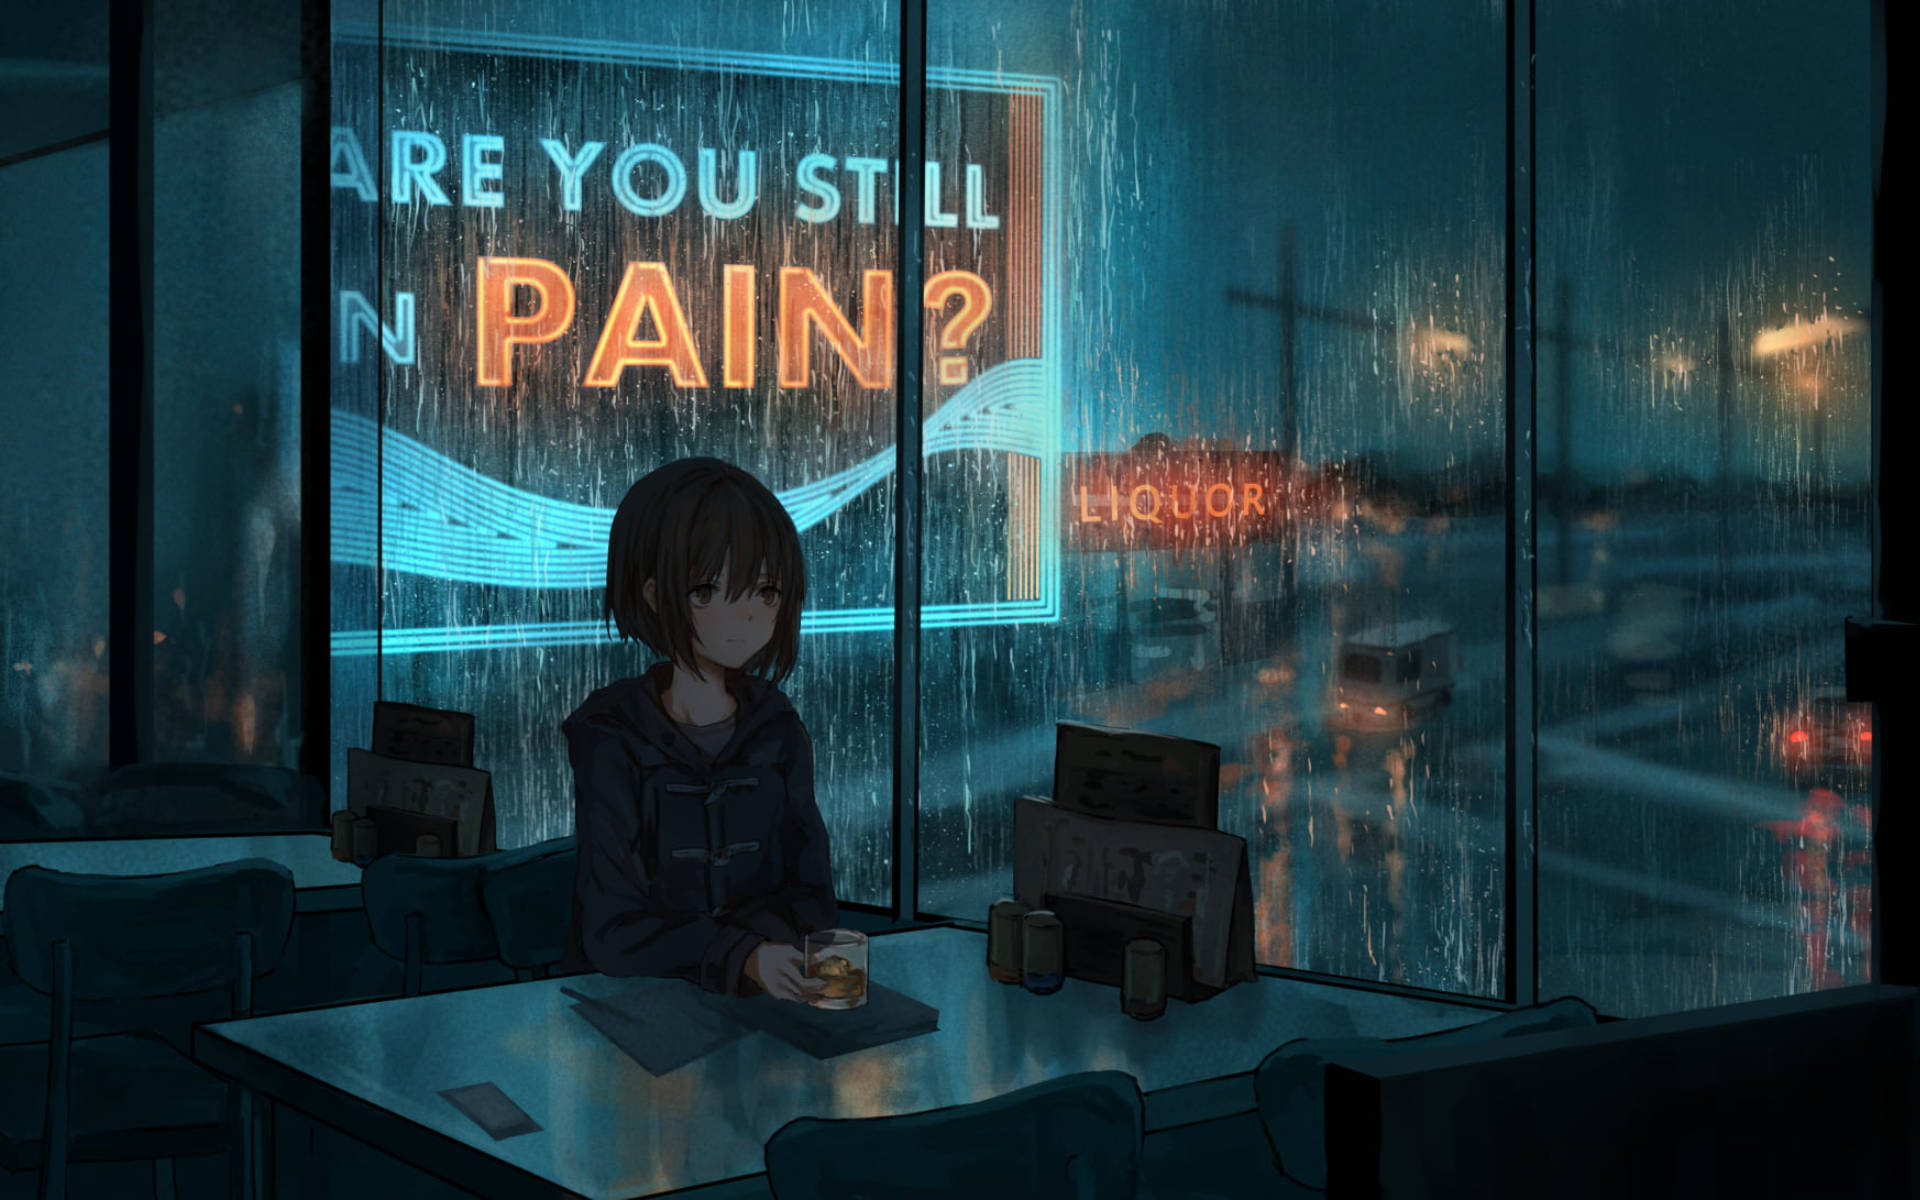 A Contemplative Anime Girl Alone In A Cozy Café Background